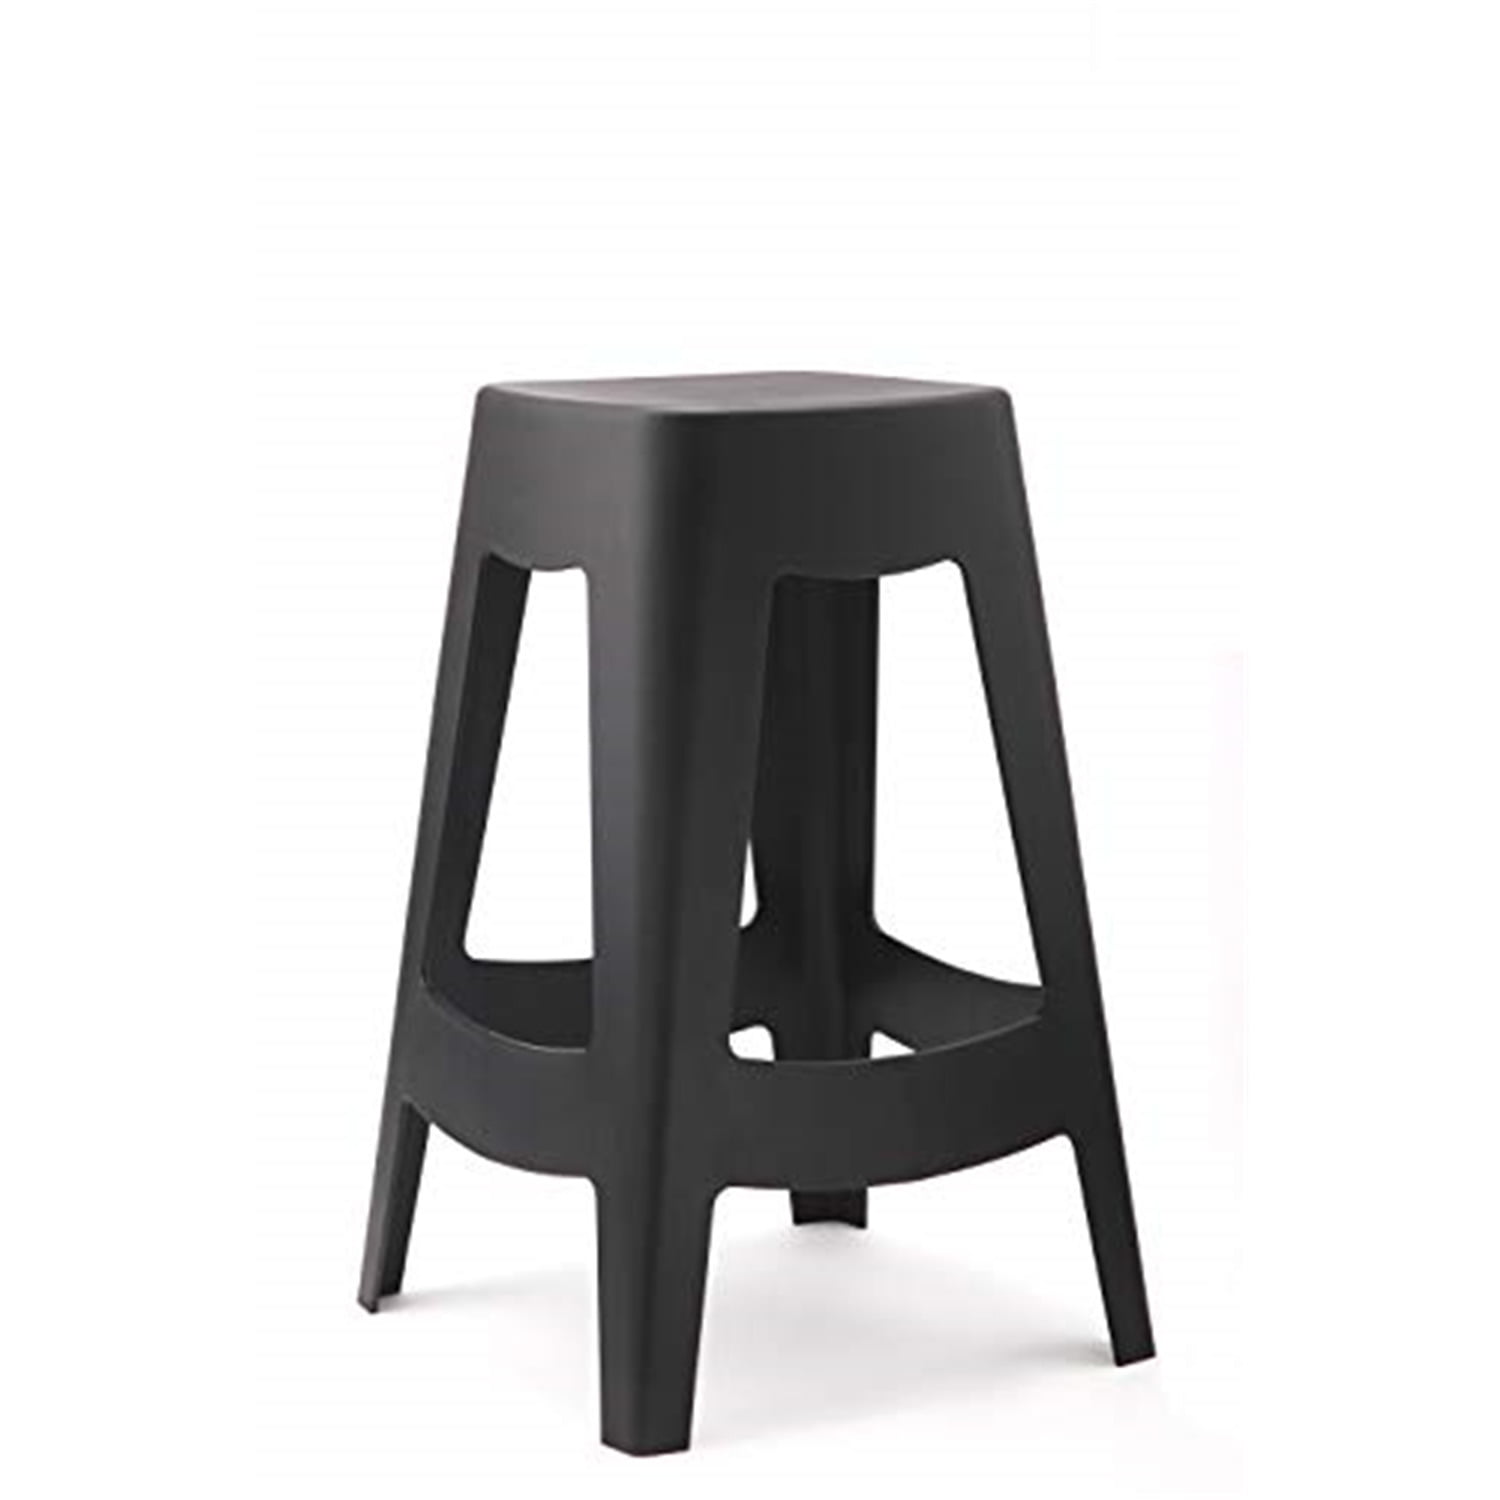 Rpc-mirage-amb-web4 Max Series Amber Chiavari Dining Chair - 36 X 16 X 16 In.